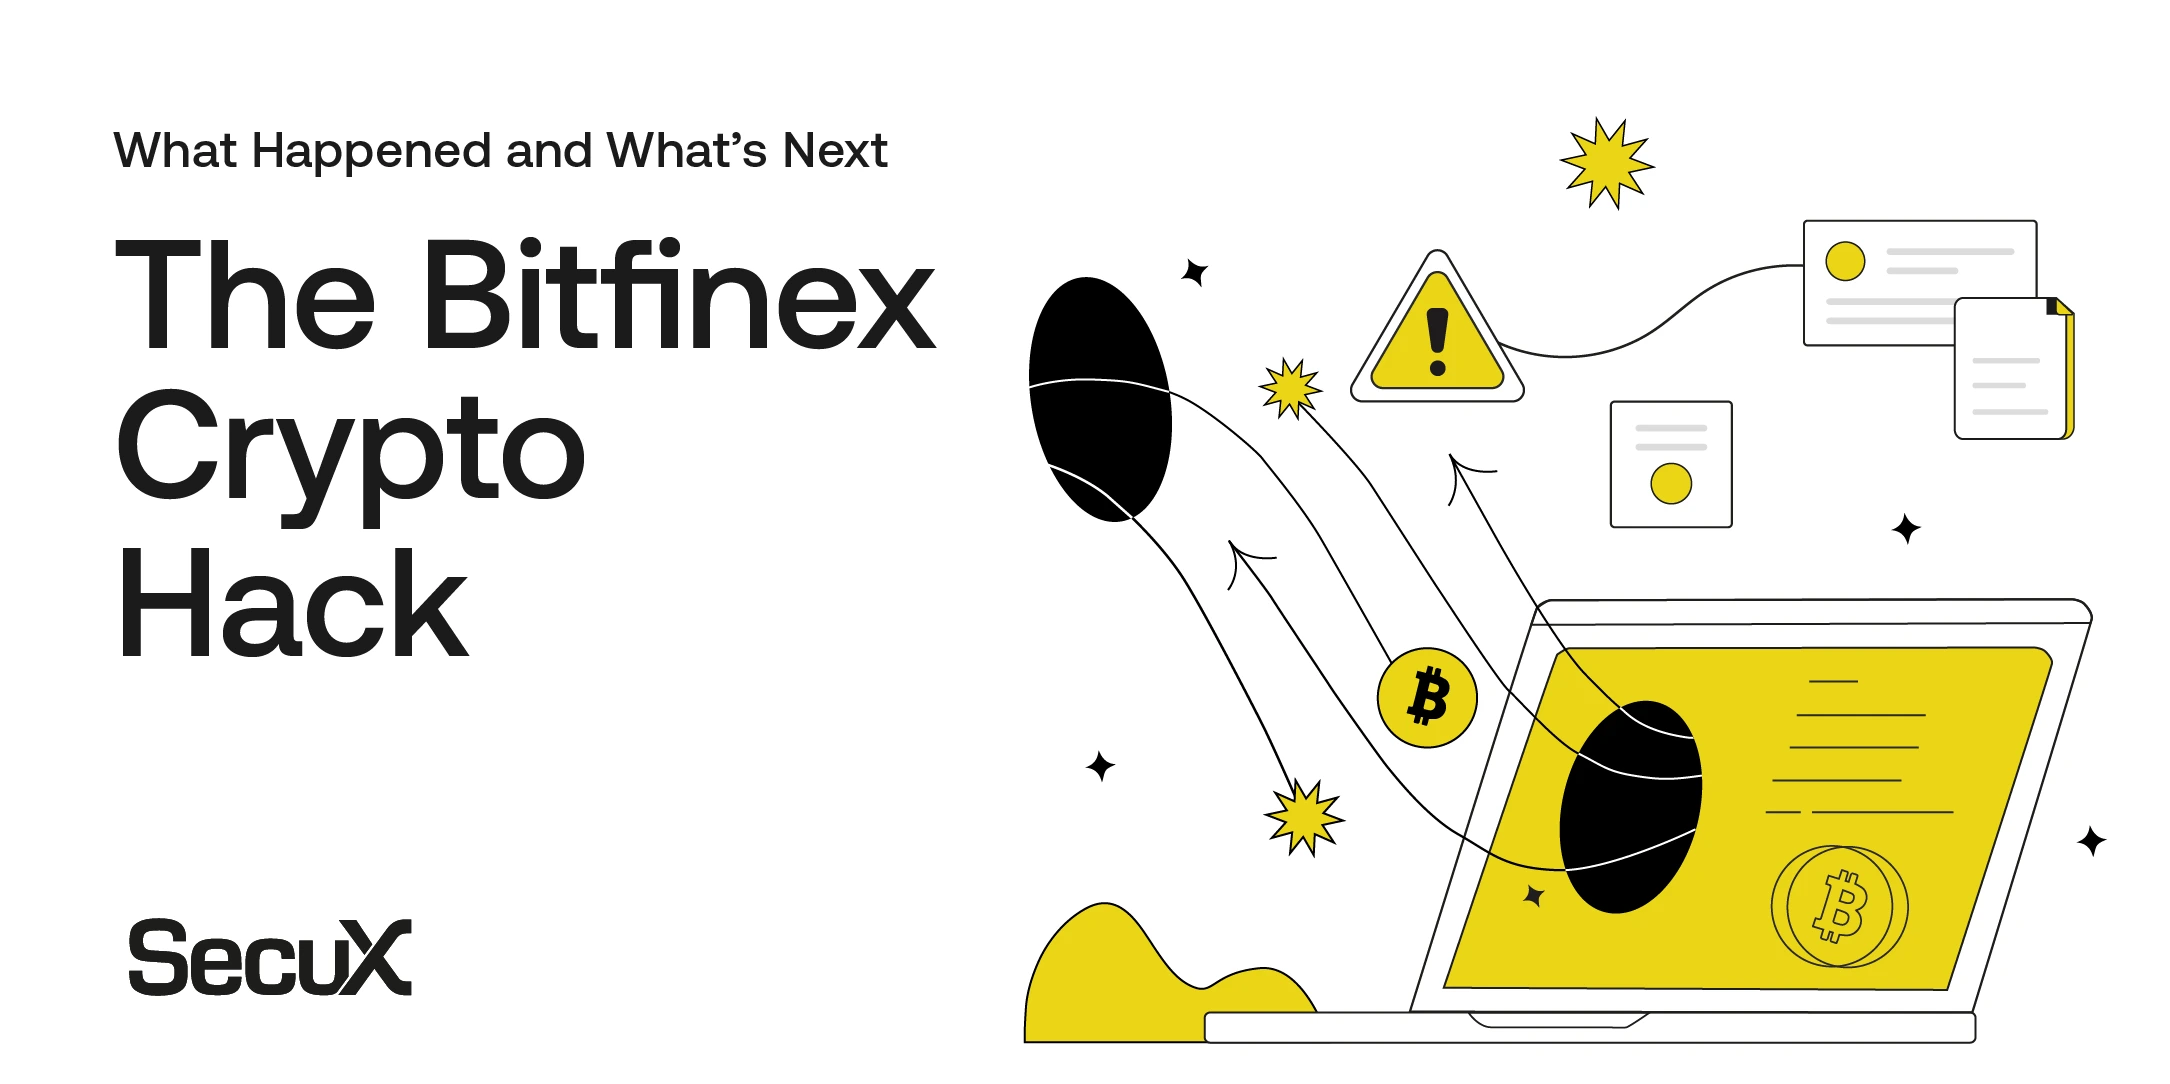 The Bitfinex Crypto Hack